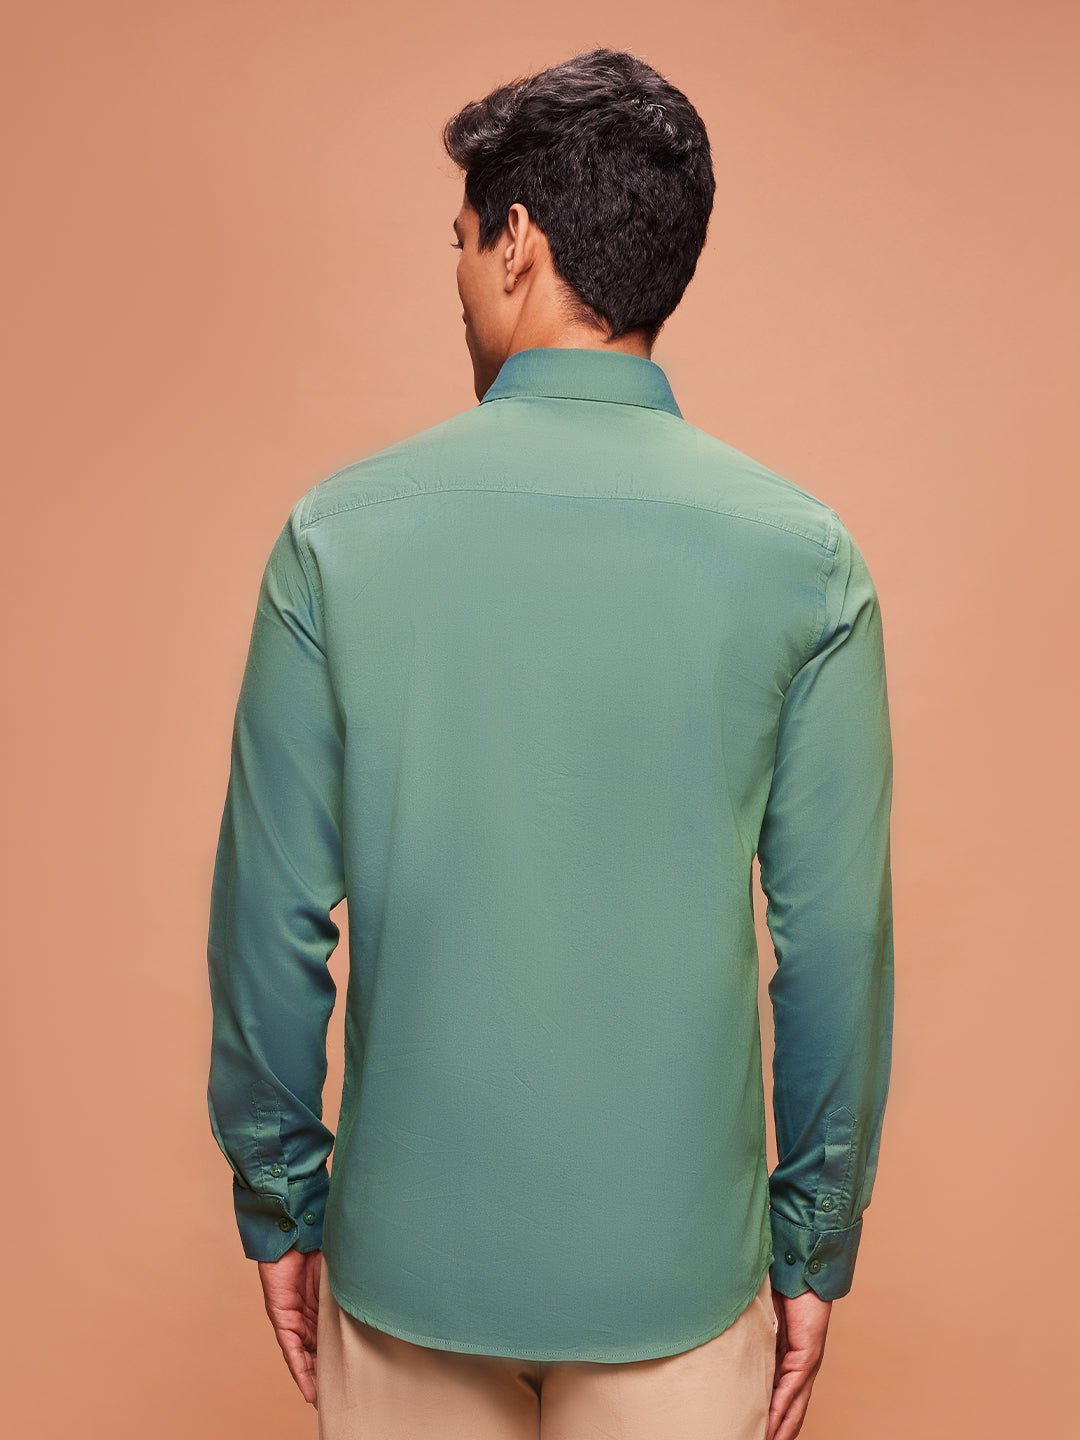 Bombay High Men's Solid Eco Green Shirt